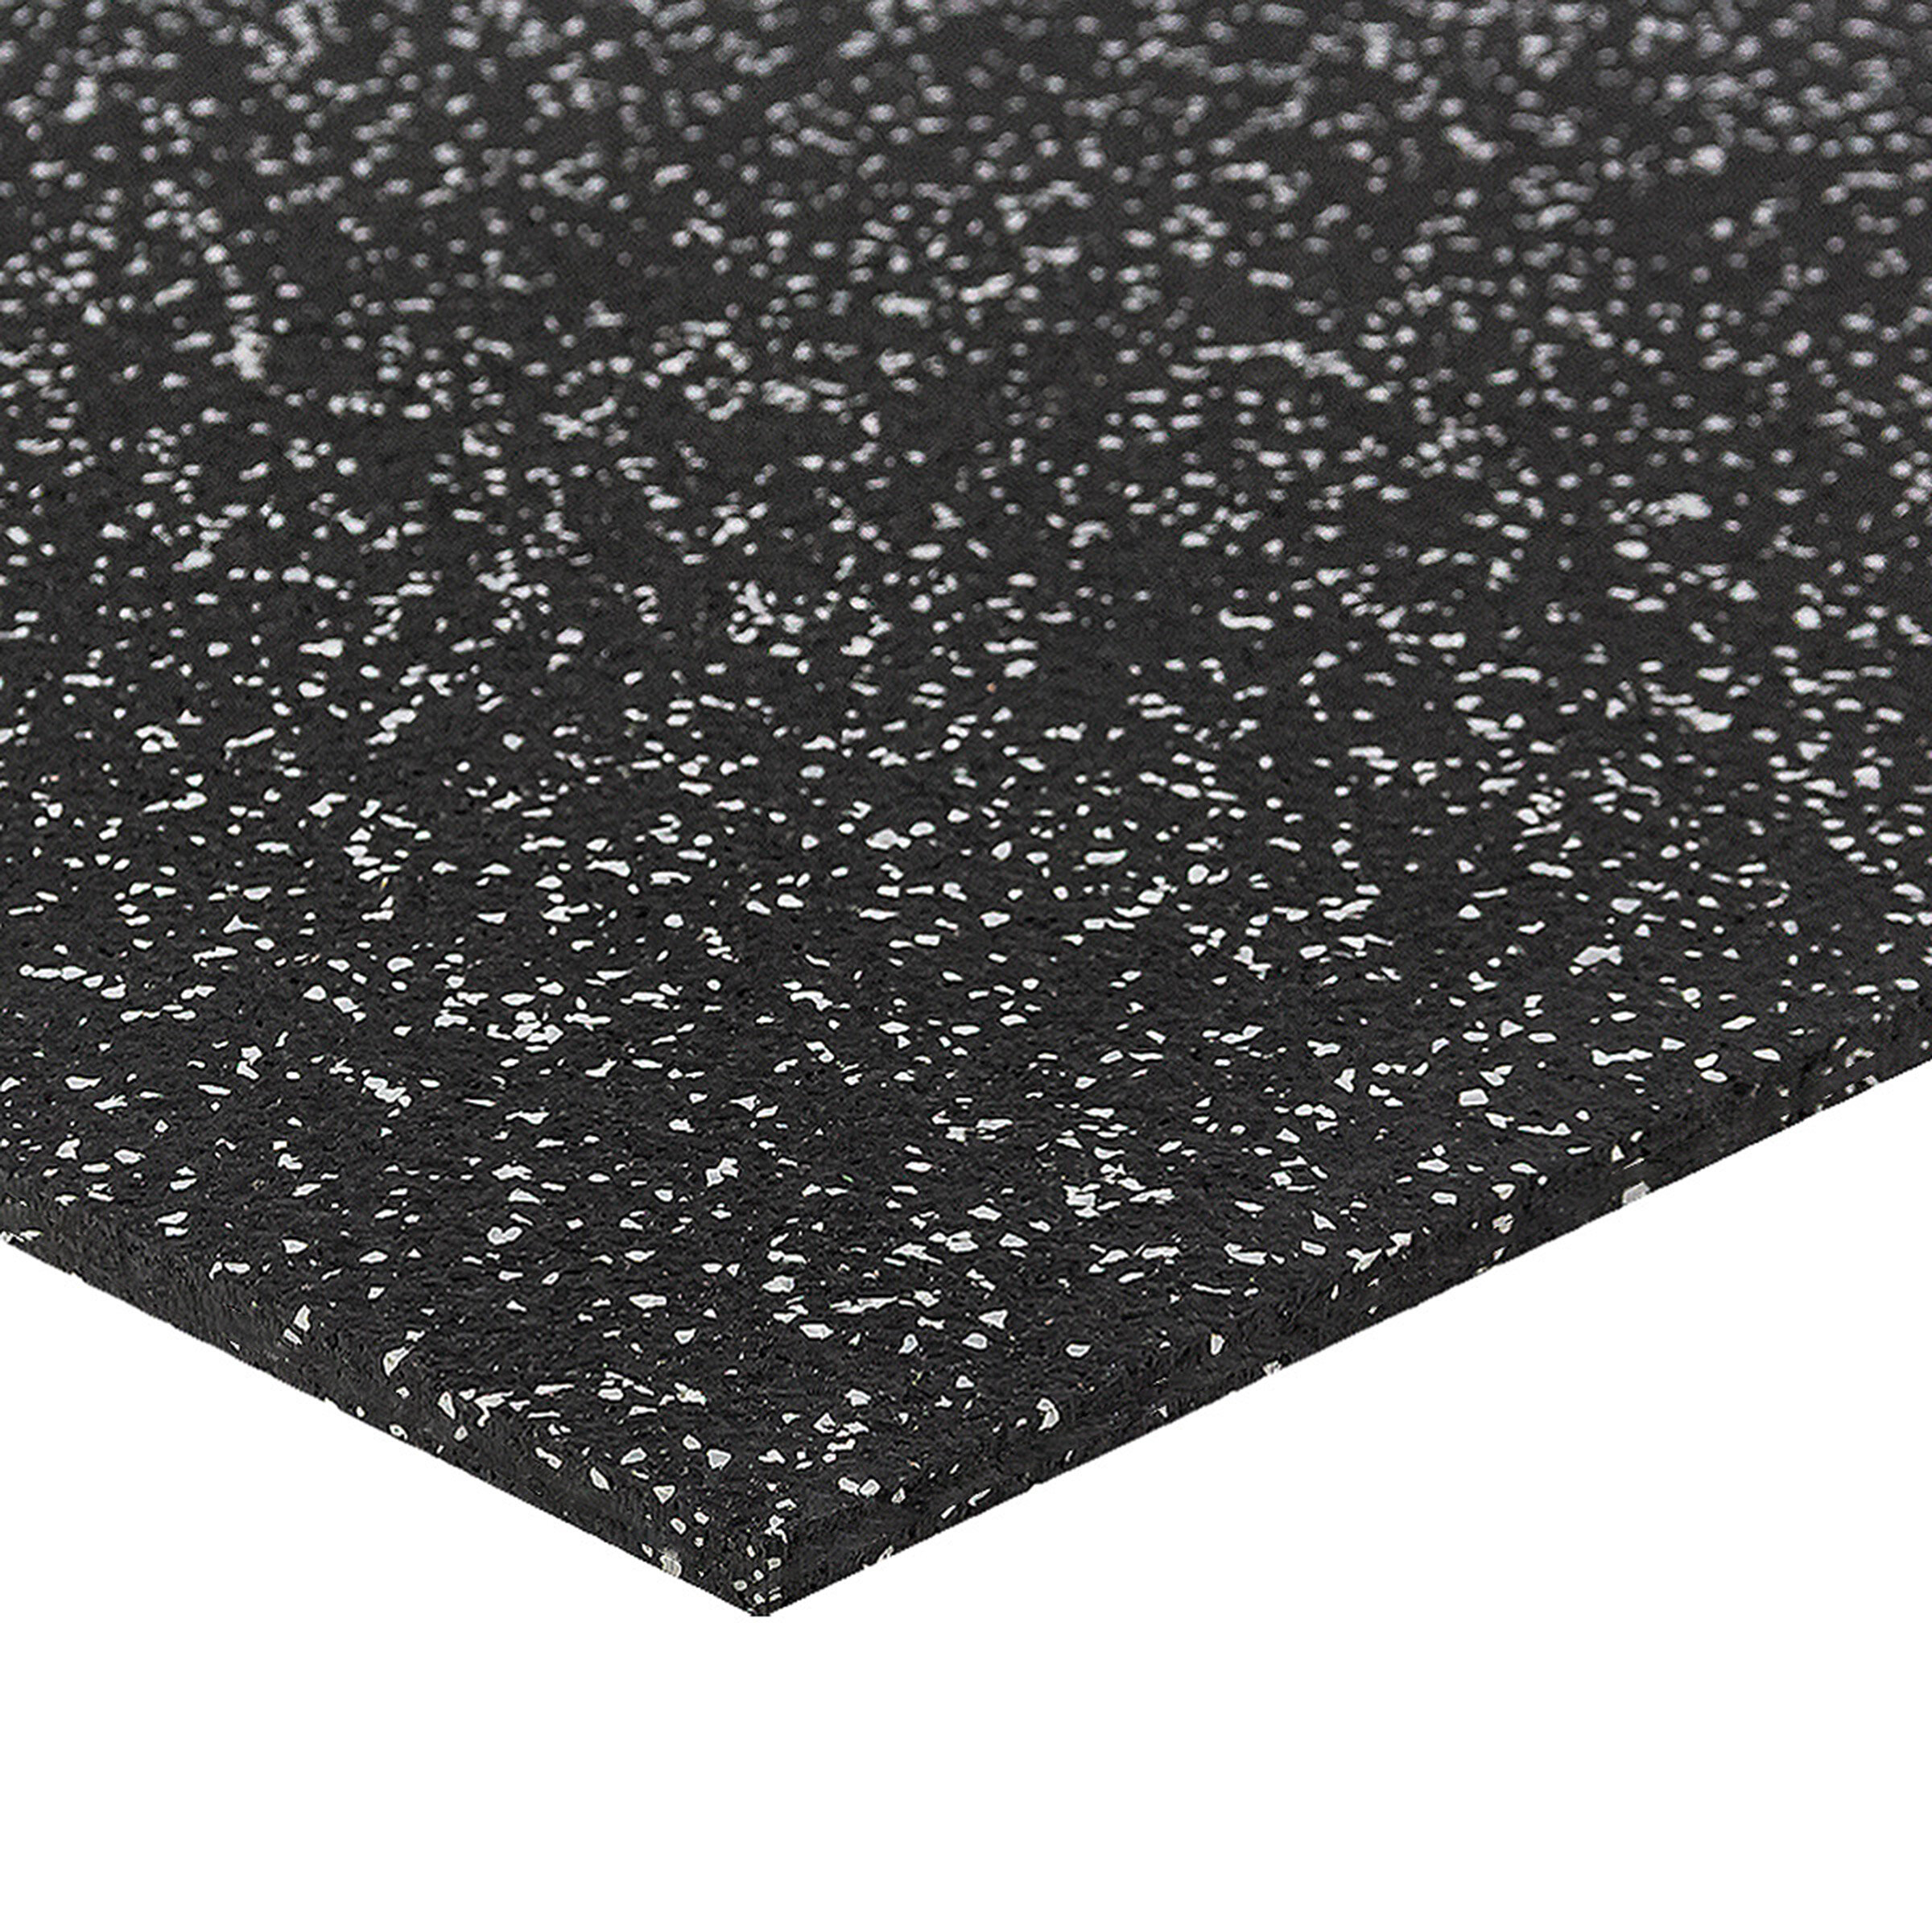 Černo-šedá podlahová guma (puzzle - střed) FLOMA FitFlo SF1050 - délka 100 cm, šířka 100 cm, výška 1 cm